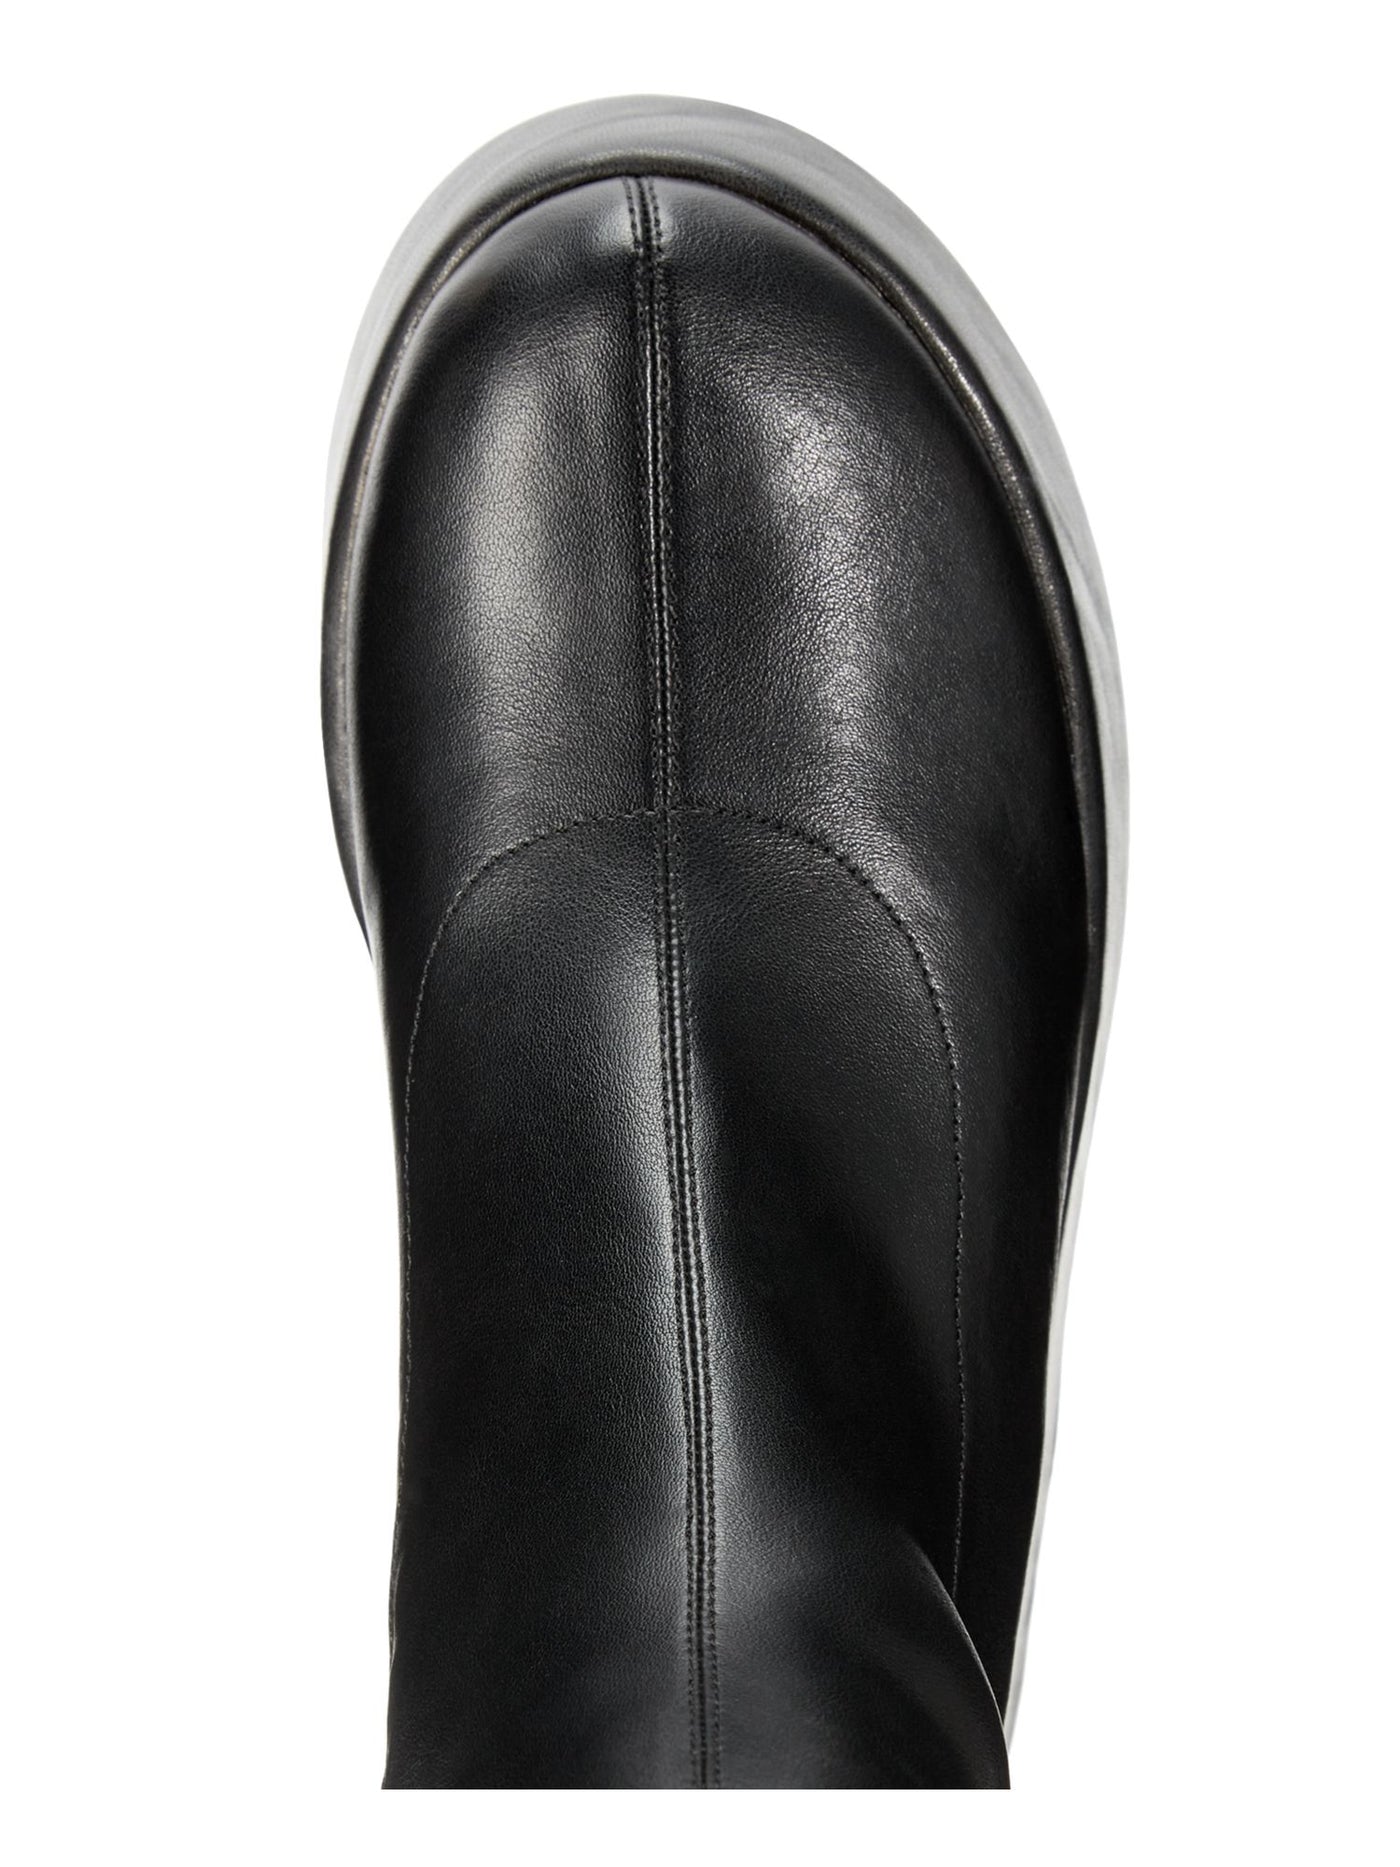 WILD PAIR Womens Black 2" Platform Padded Enchantt Round Toe Wedge Zip-Up Dress Boots Shoes 7 M